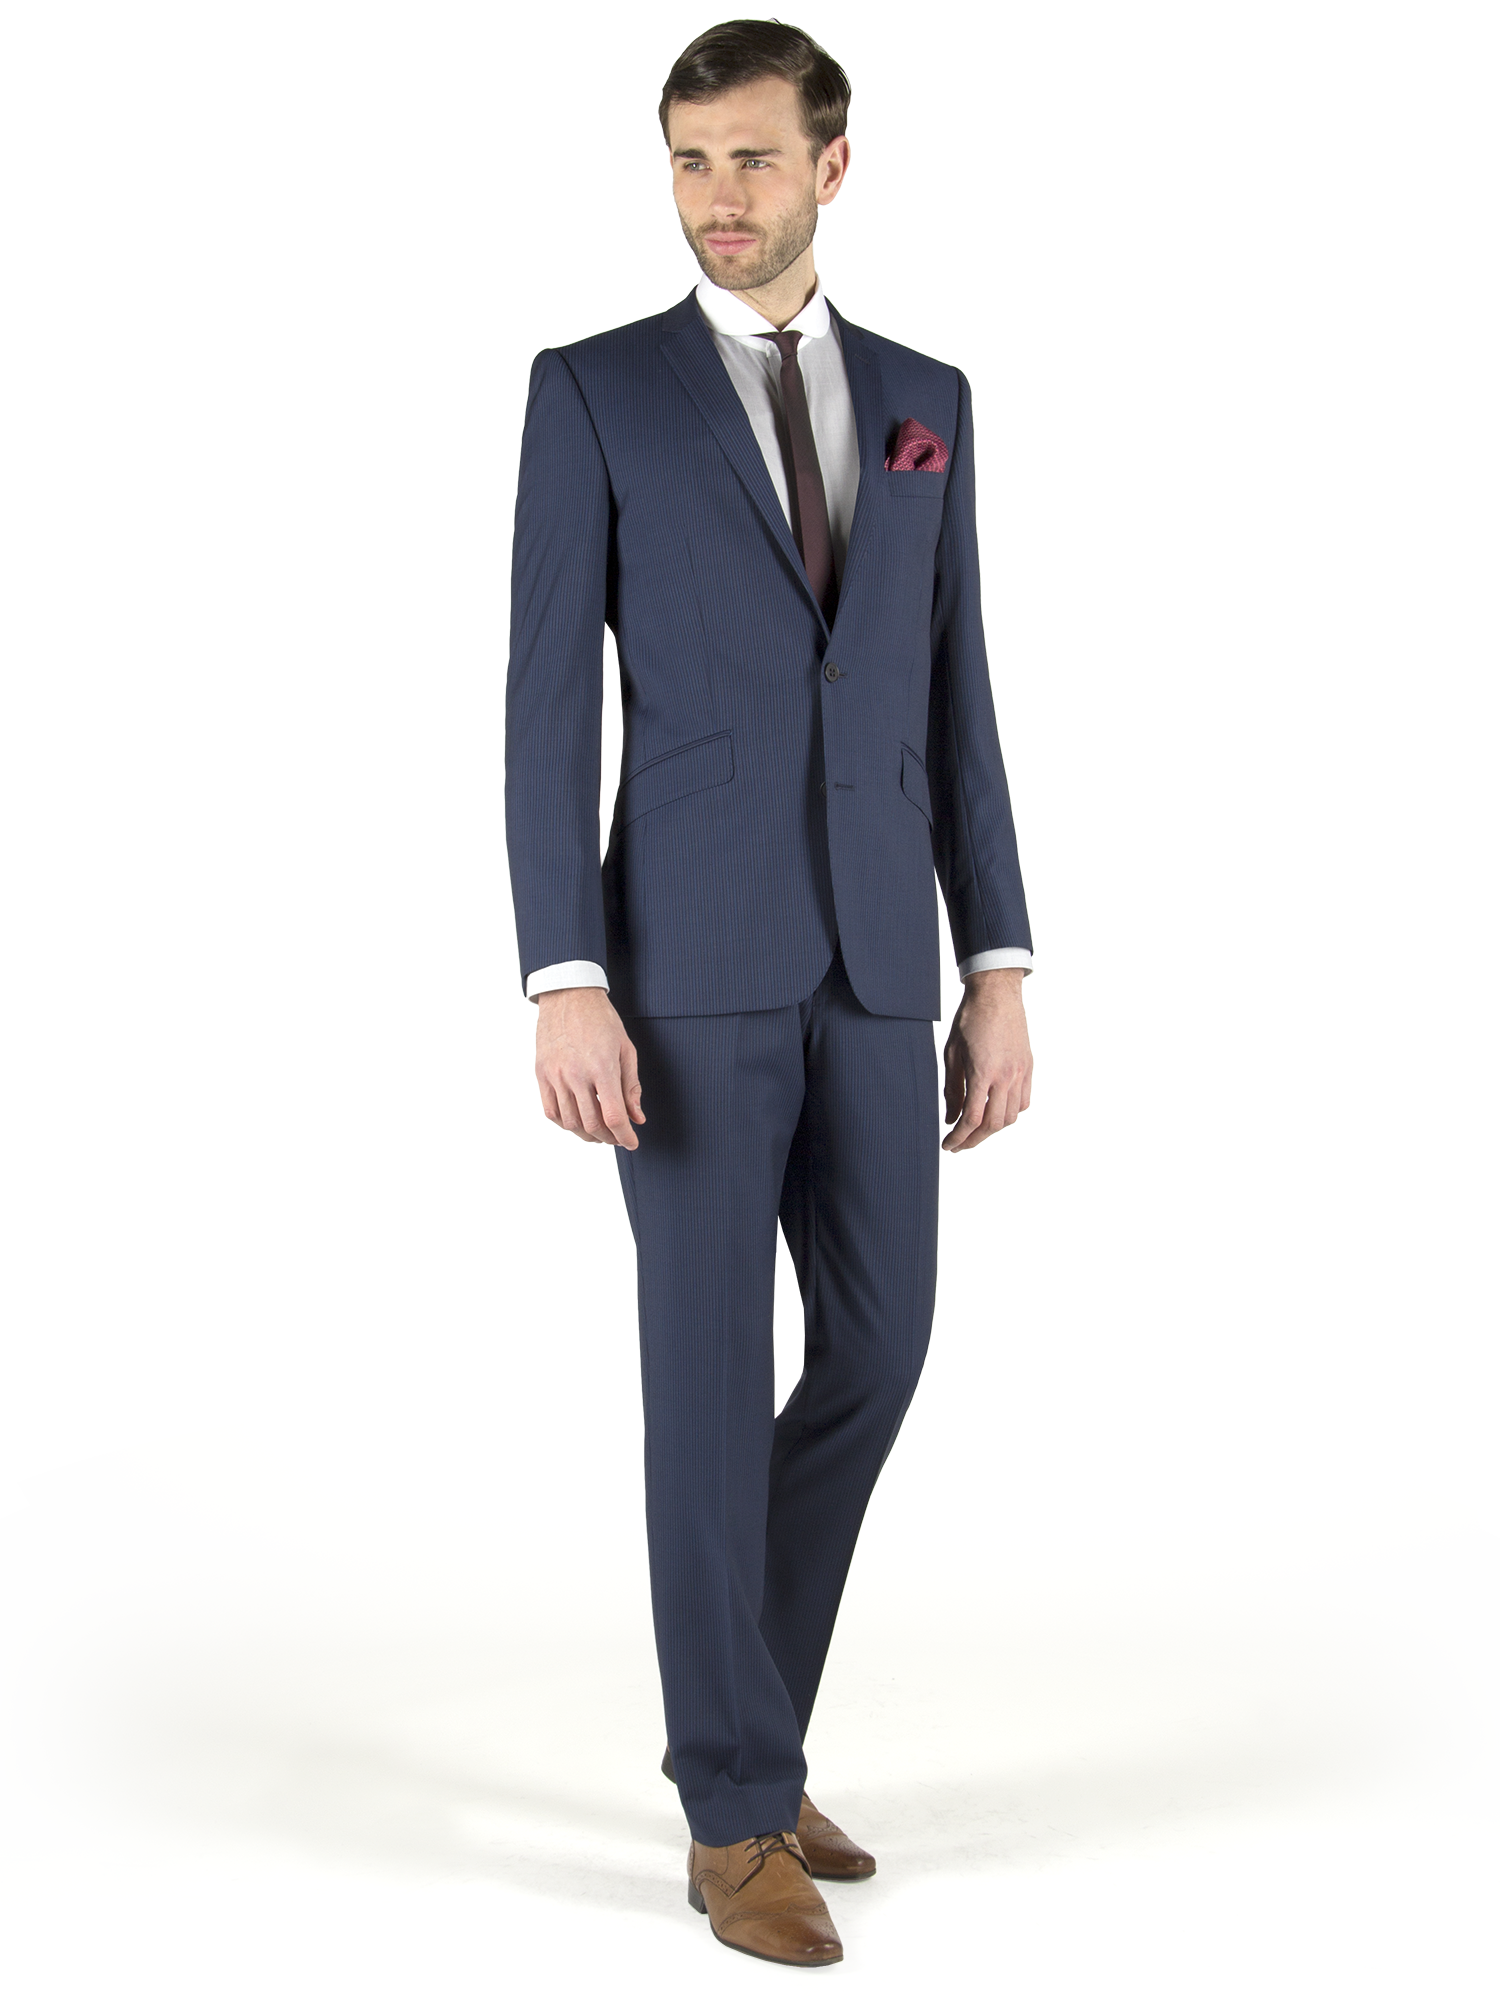 Formal Suit Png - Men, Transparent background PNG HD thumbnail